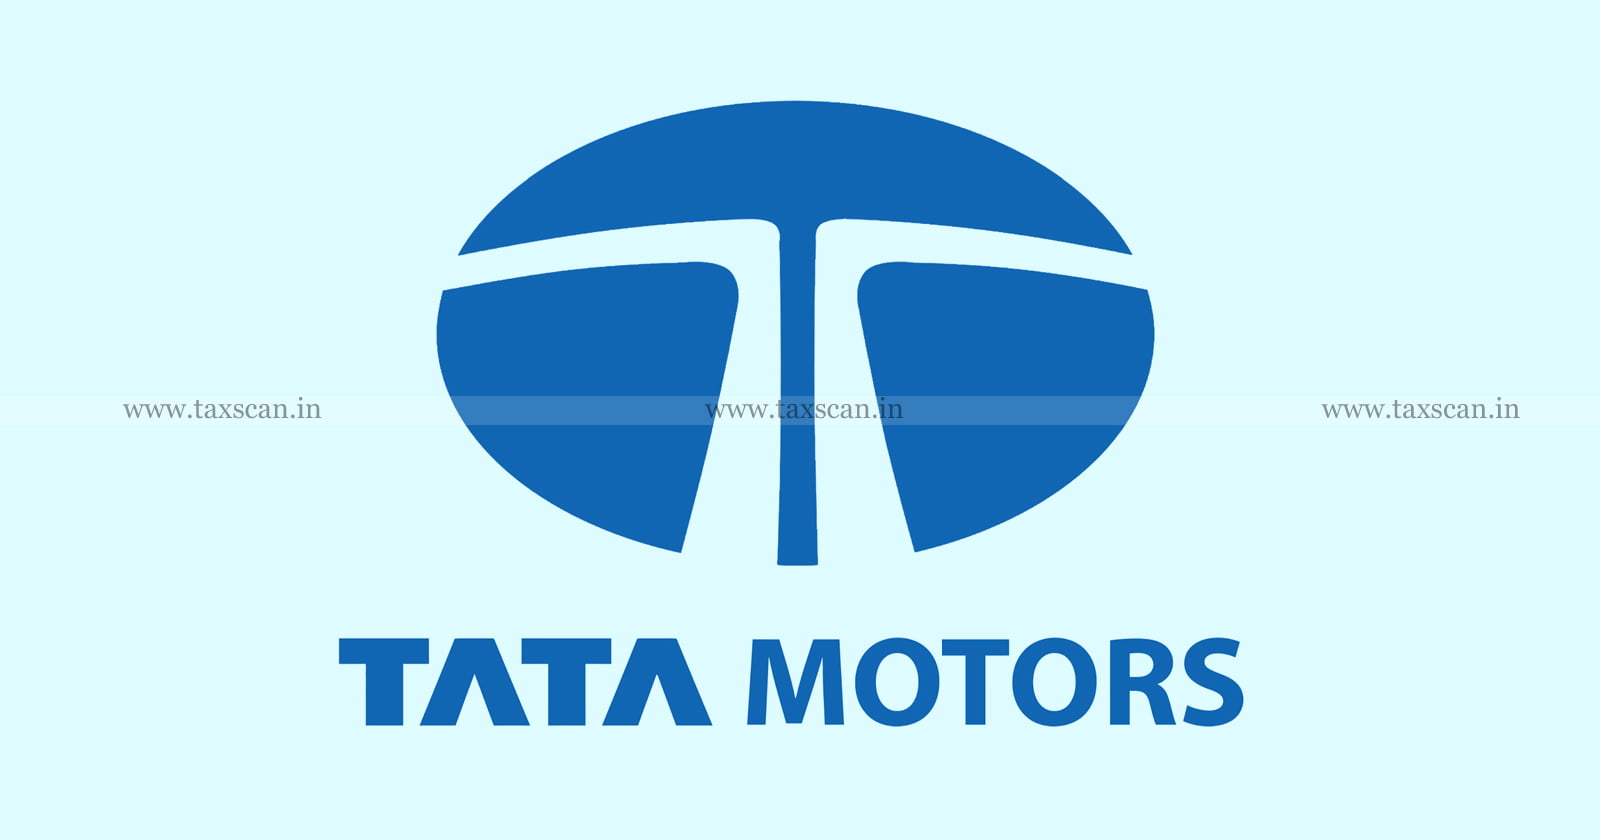 Garbage - Tipper - Vehicles - of - Tata - Motors - to - Municipalities - attract - GST - AAR -TAXSCAN